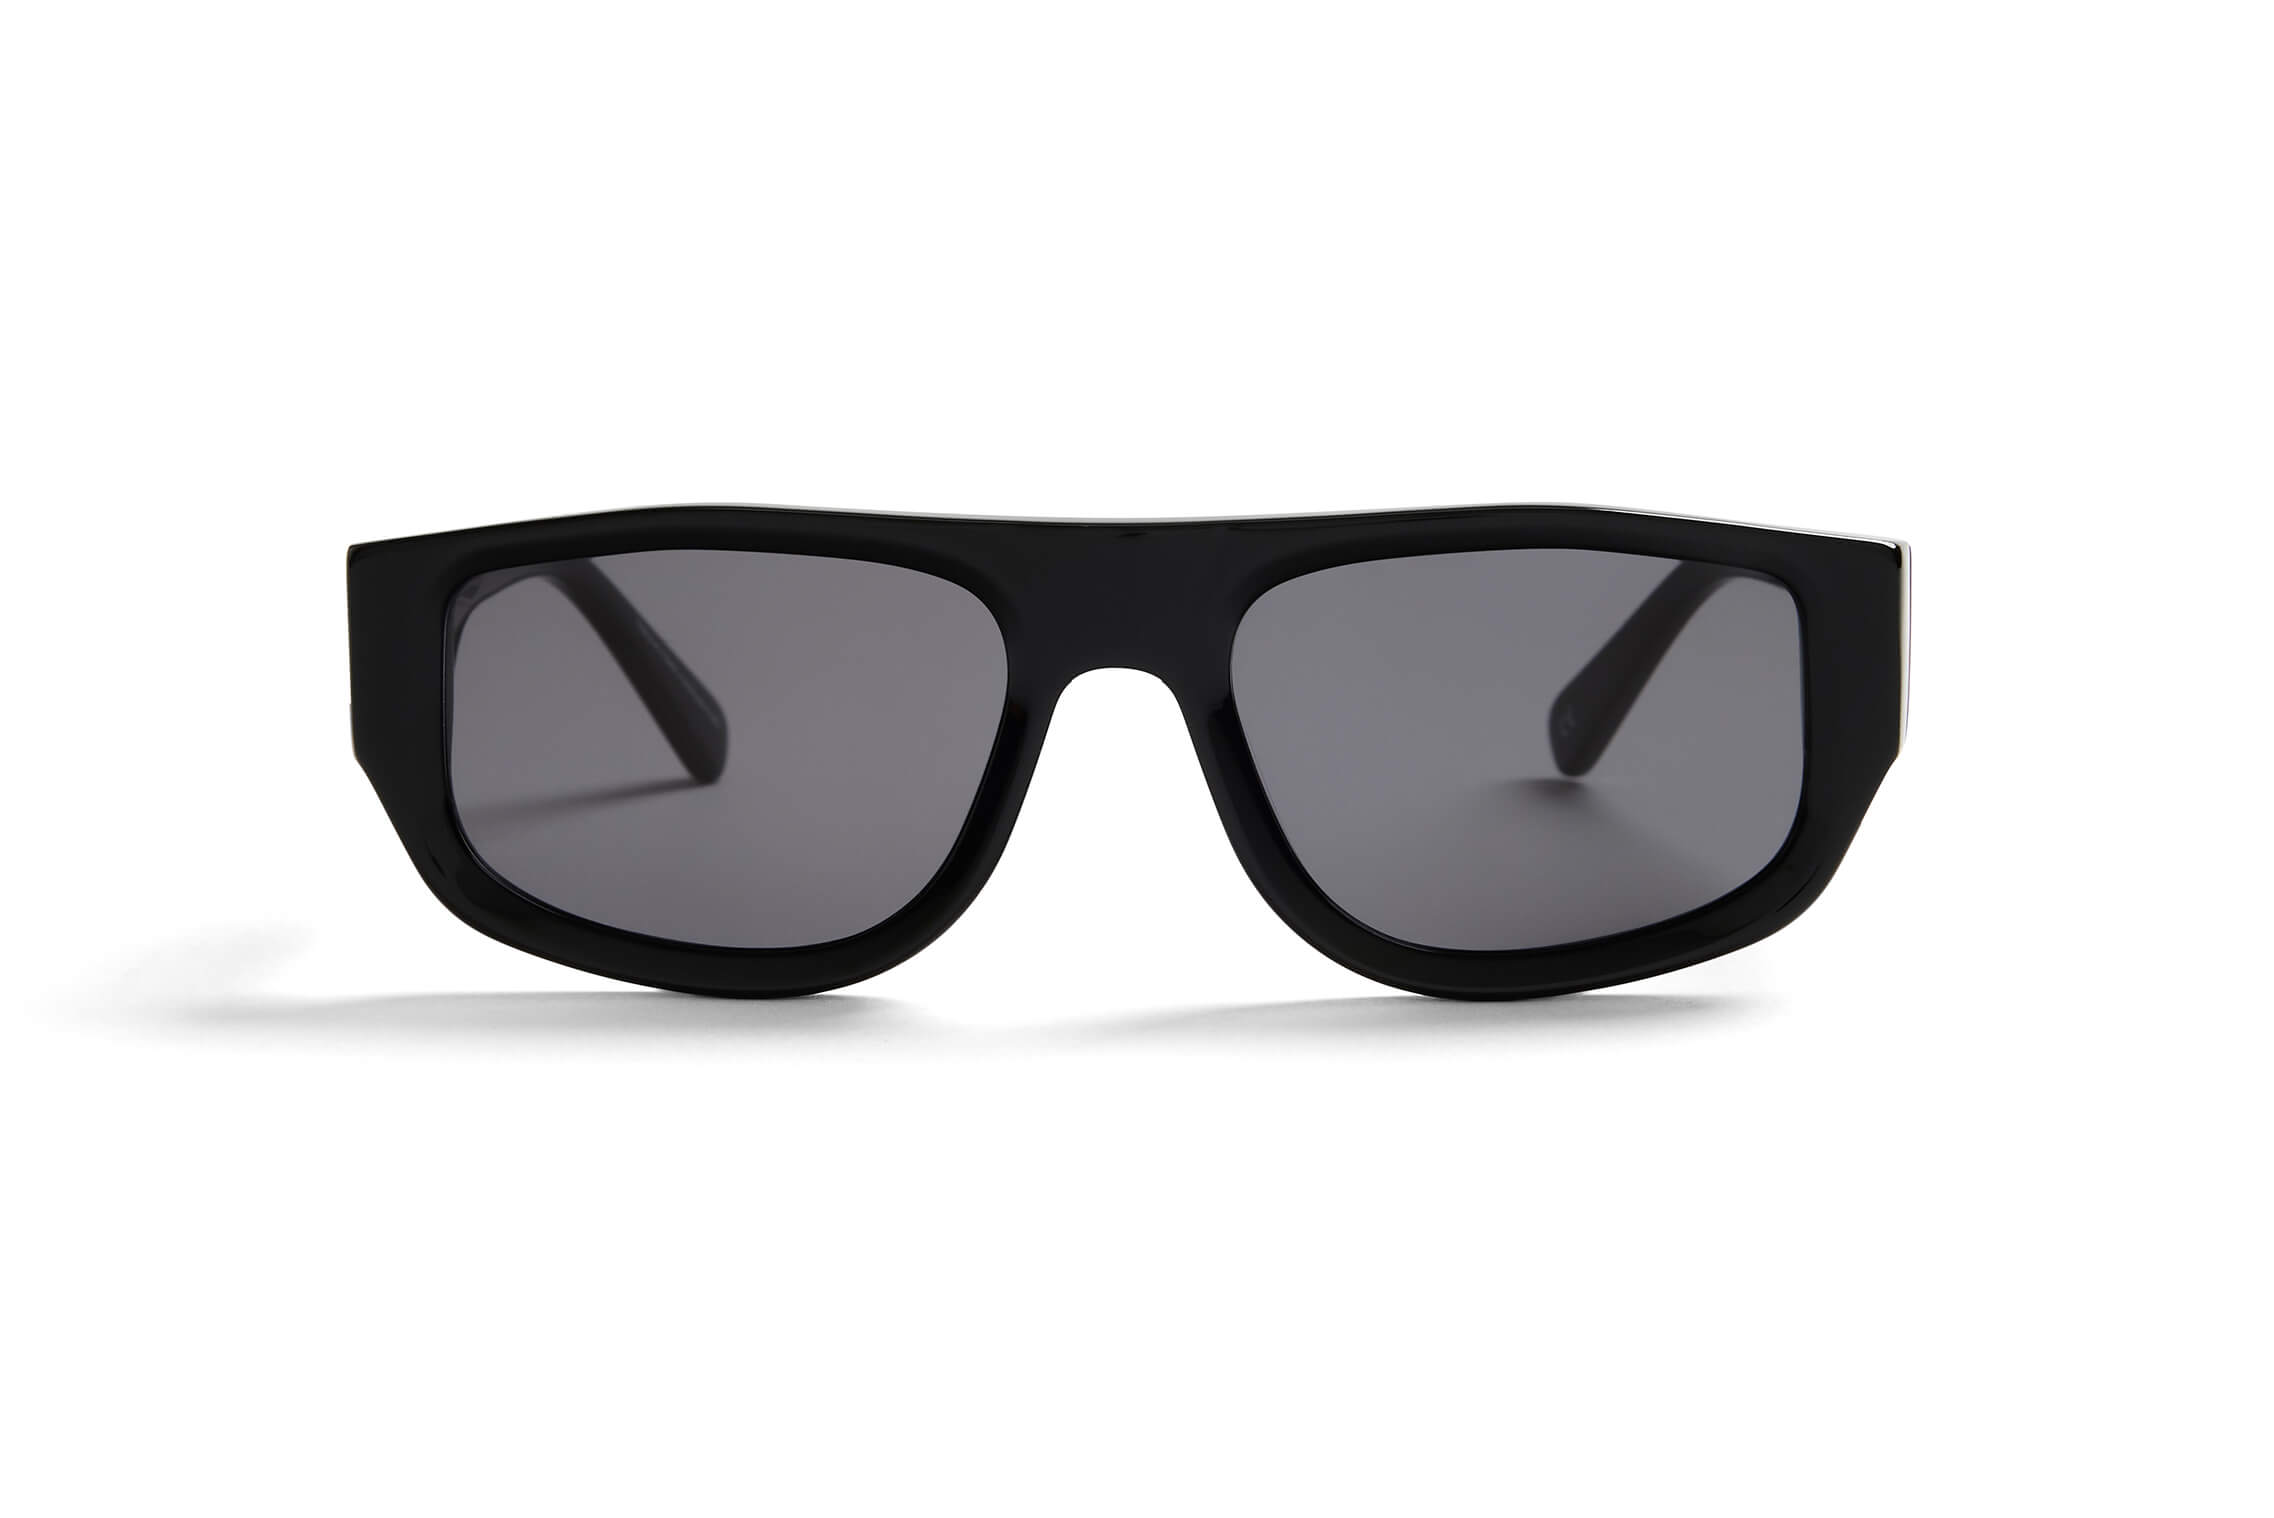 Sunglasses Nightcore Black Gray, All Eyewear